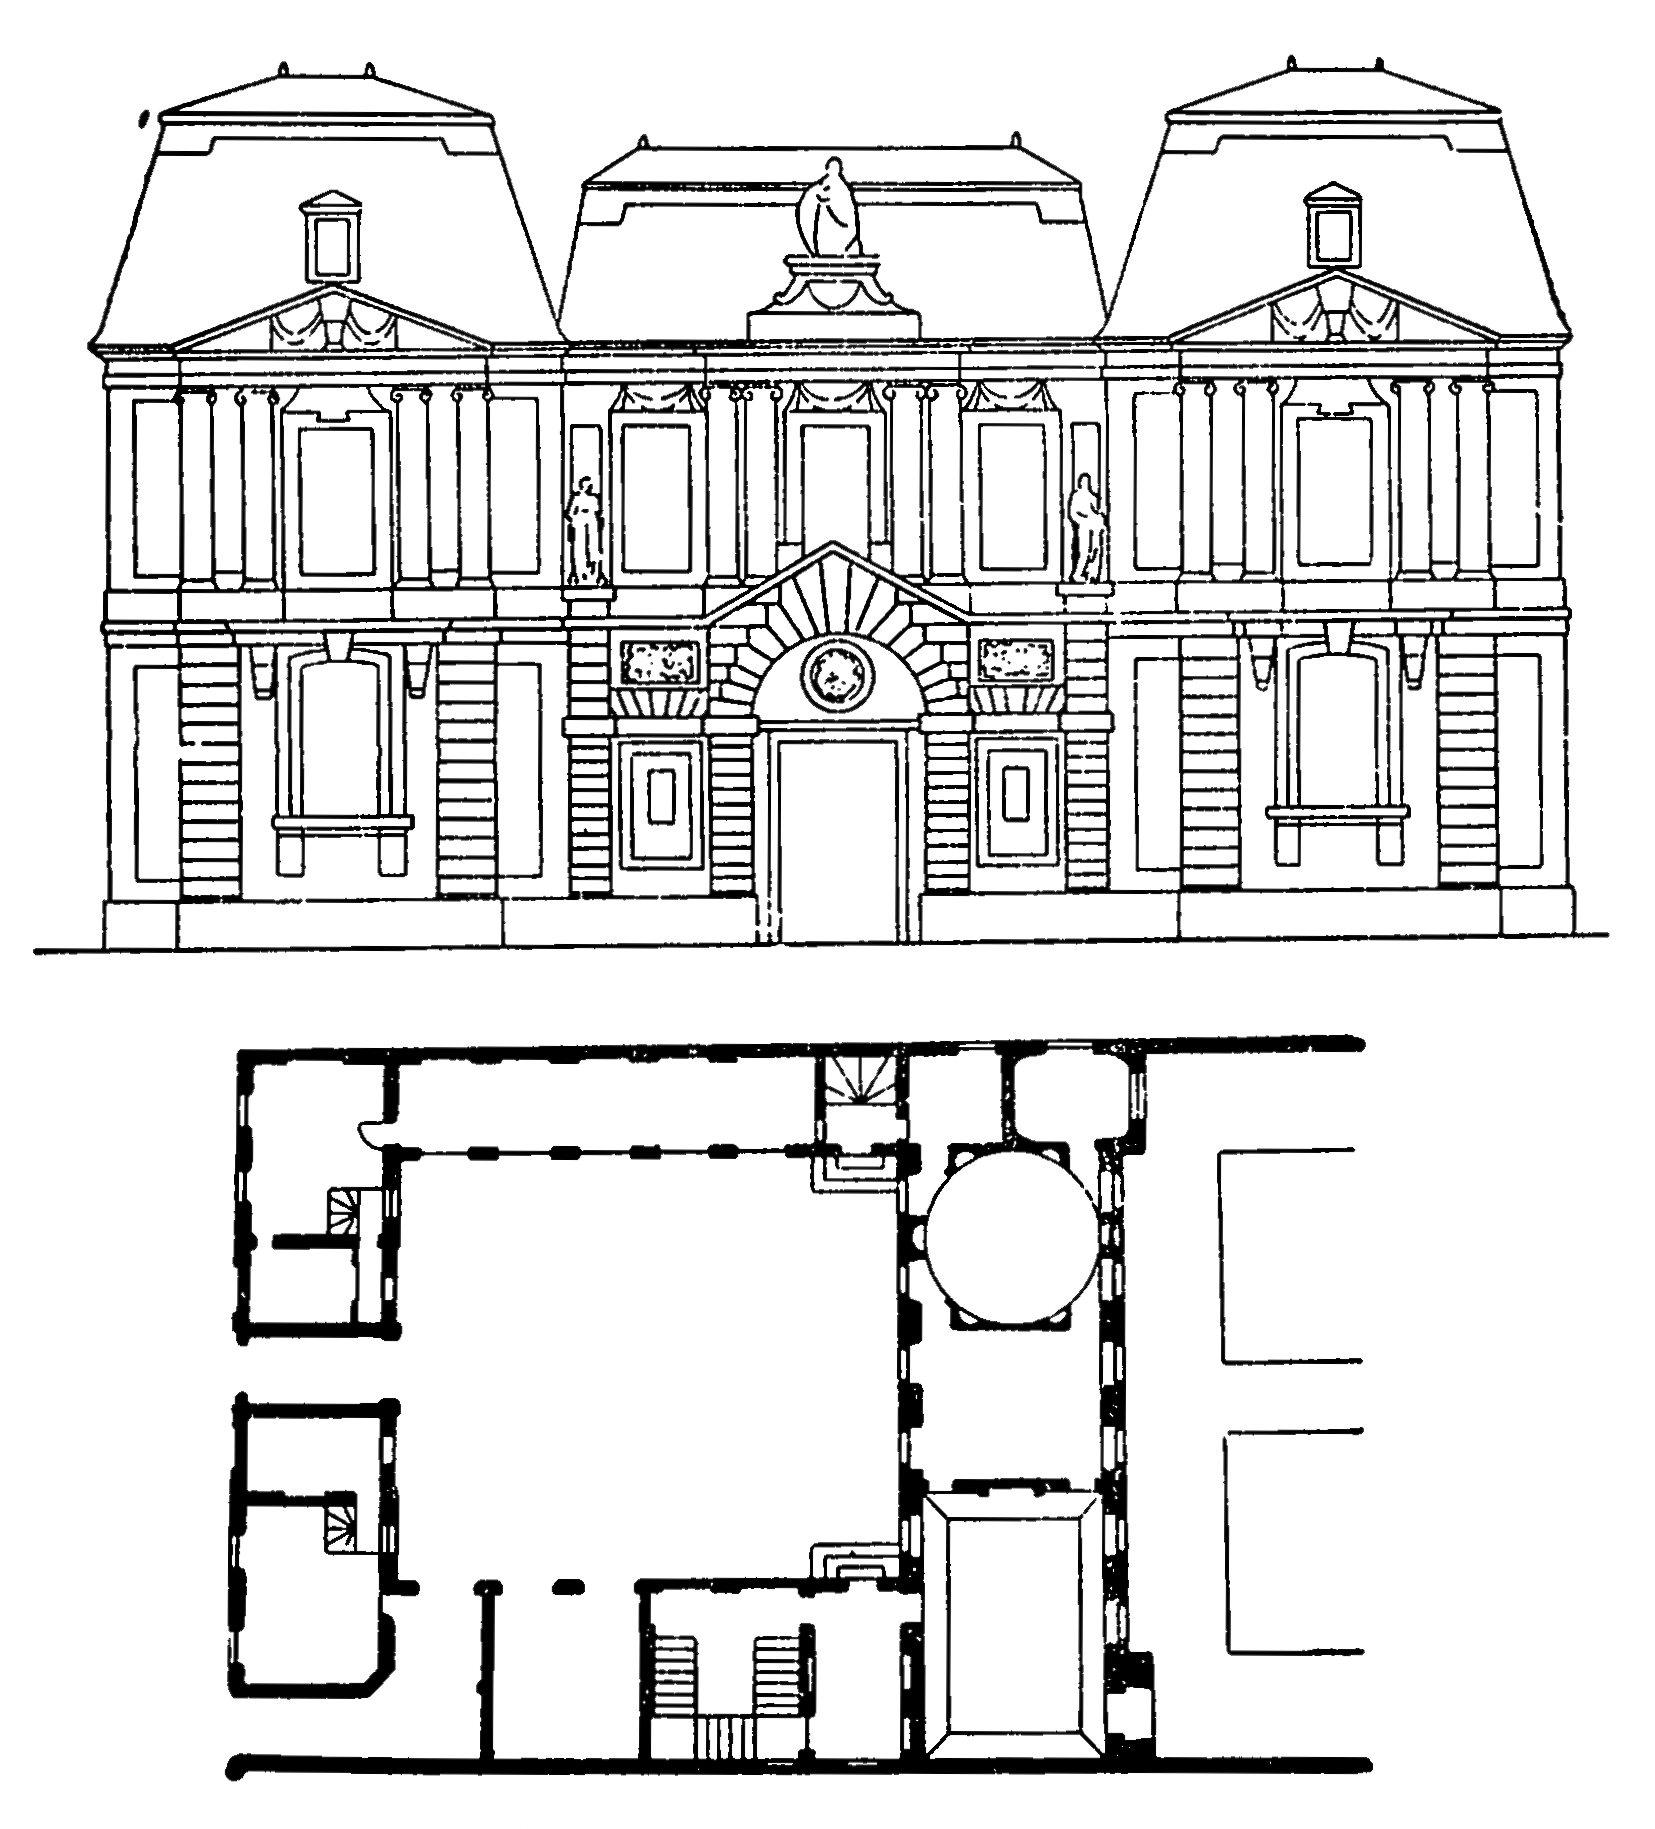 14. Париж. Отель Карнавале, 1636 г., Ф. Мансар. Фасад и план